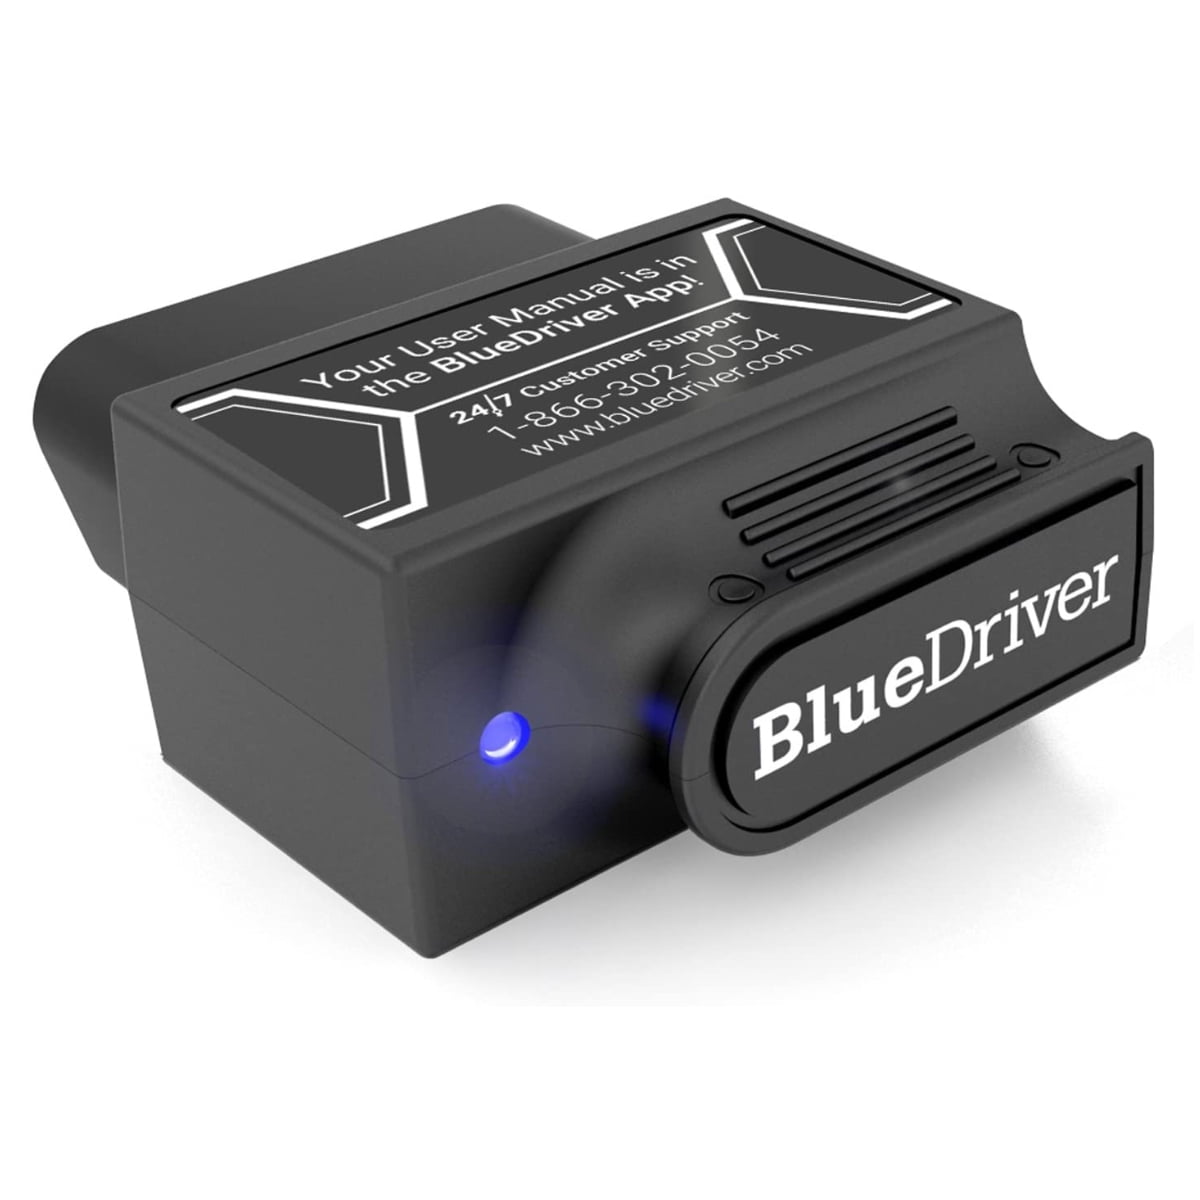 BlueDriver Pro OBD2 Bluetooth Car Diagnostic Scan Tool and Code